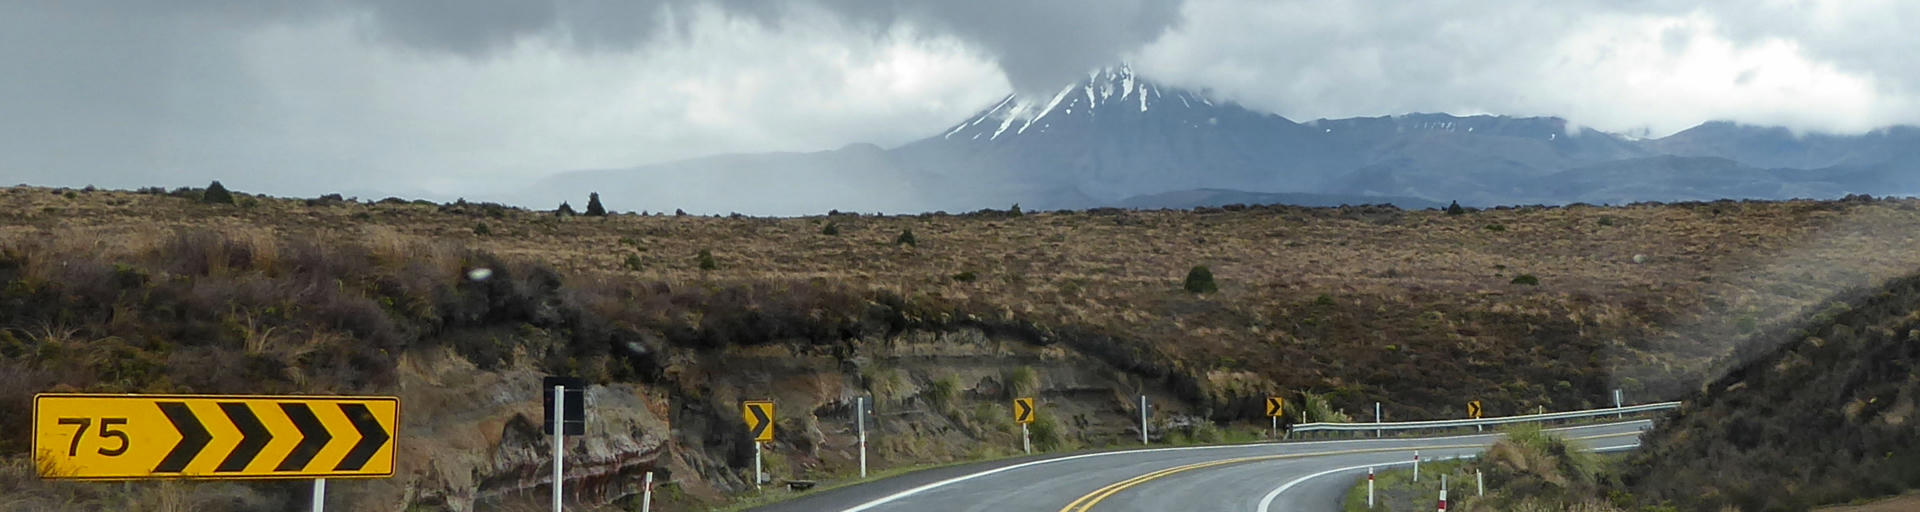 tongariro national park, nordinsel neuseeland, reisen ü60, wohnmobil rundreise nordinsel 